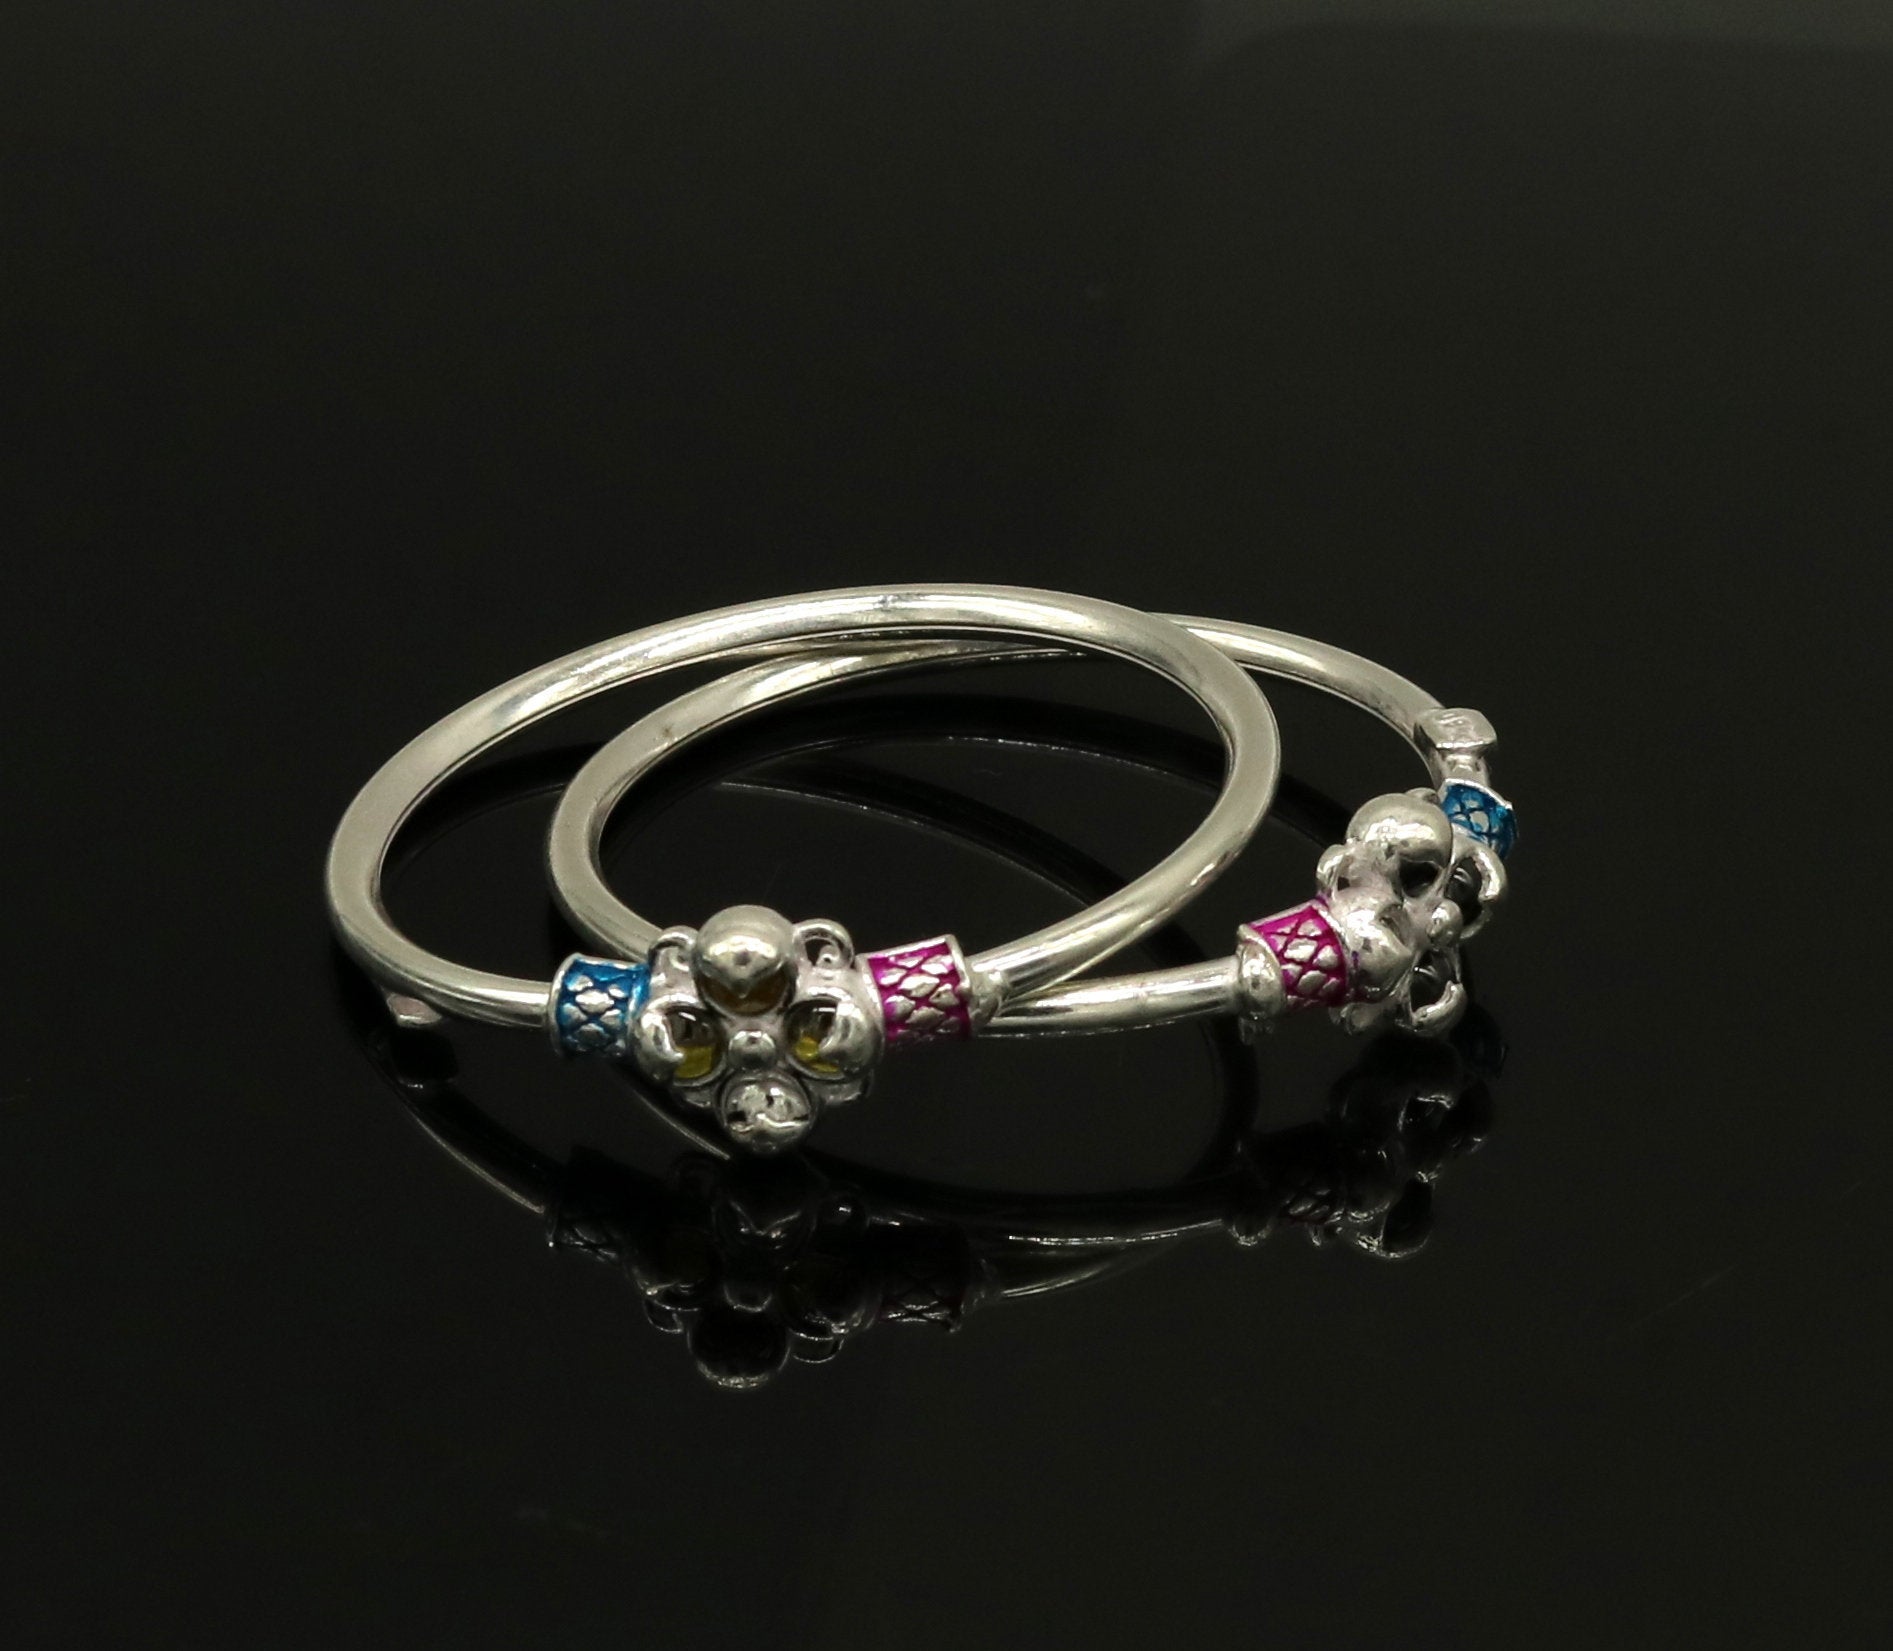 Amazing plain design solid silver new born bangle bracelet kada unisex kids jewelry for gifting tribal belly dance jewelry  nbbk85 - TRIBAL ORNAMENTS